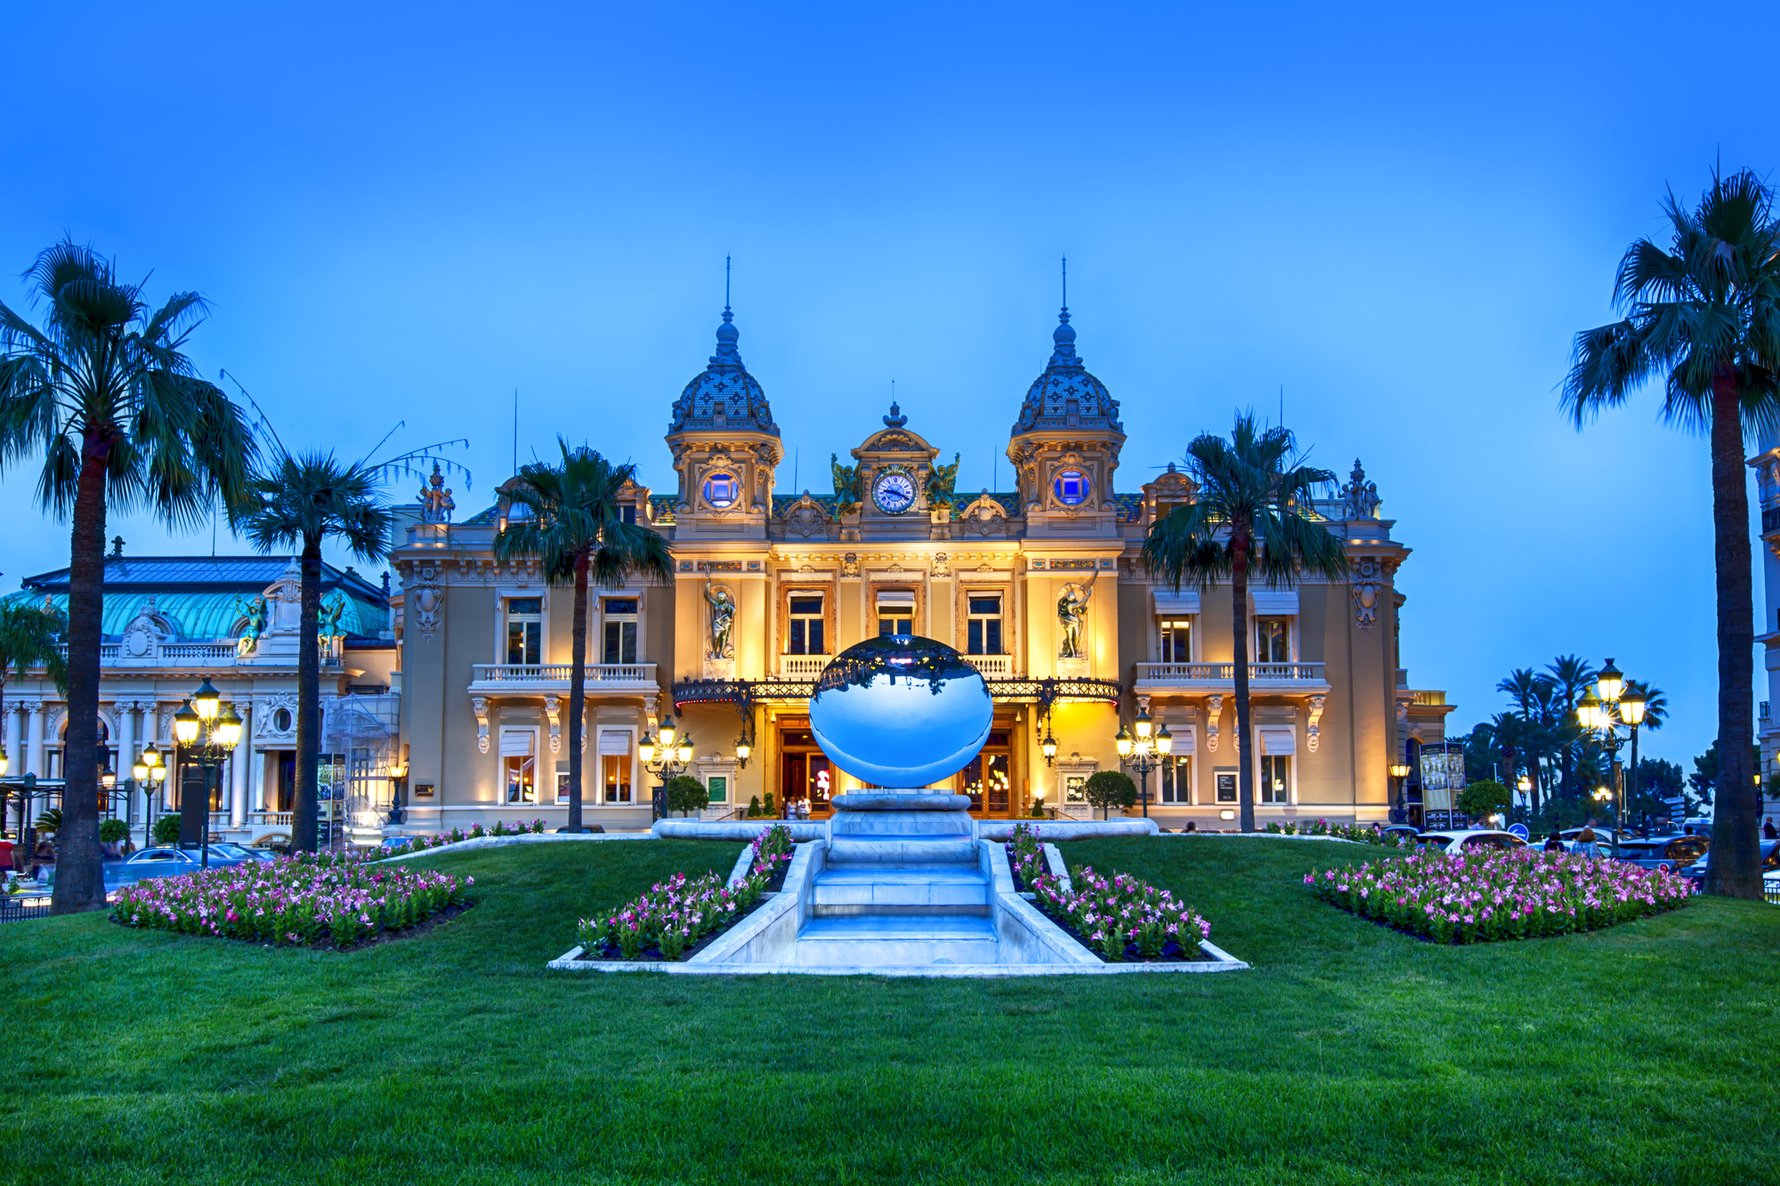 Casino du Monte Carlo in Monaco © Robyn Mackenzie / Shutterstock.com